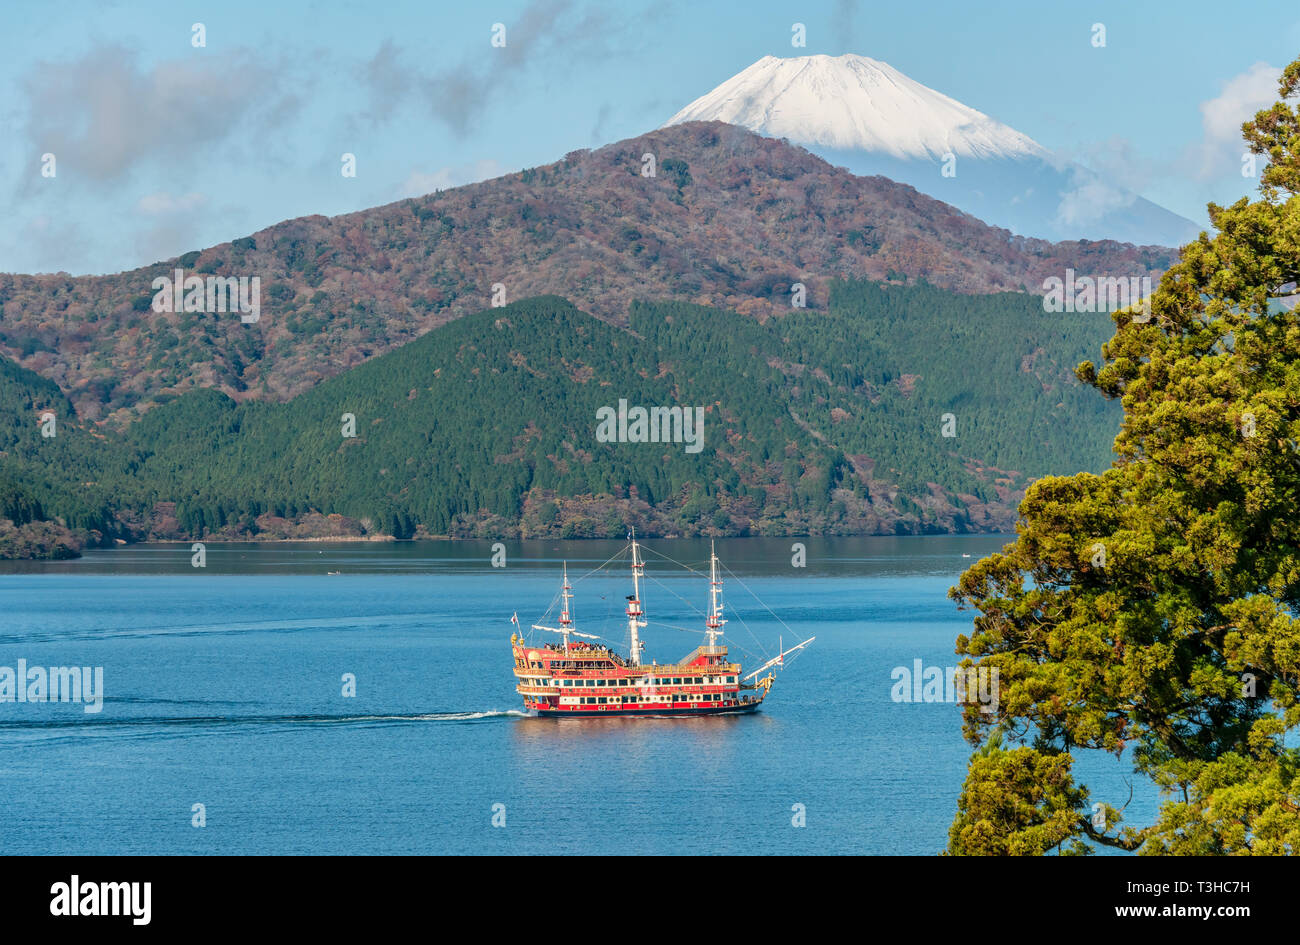 Lake Ashi (Ashinoko) sightseeing pirate ship Royal II with Mt.Fuji at the background, Hakone, Japan Stock Photo